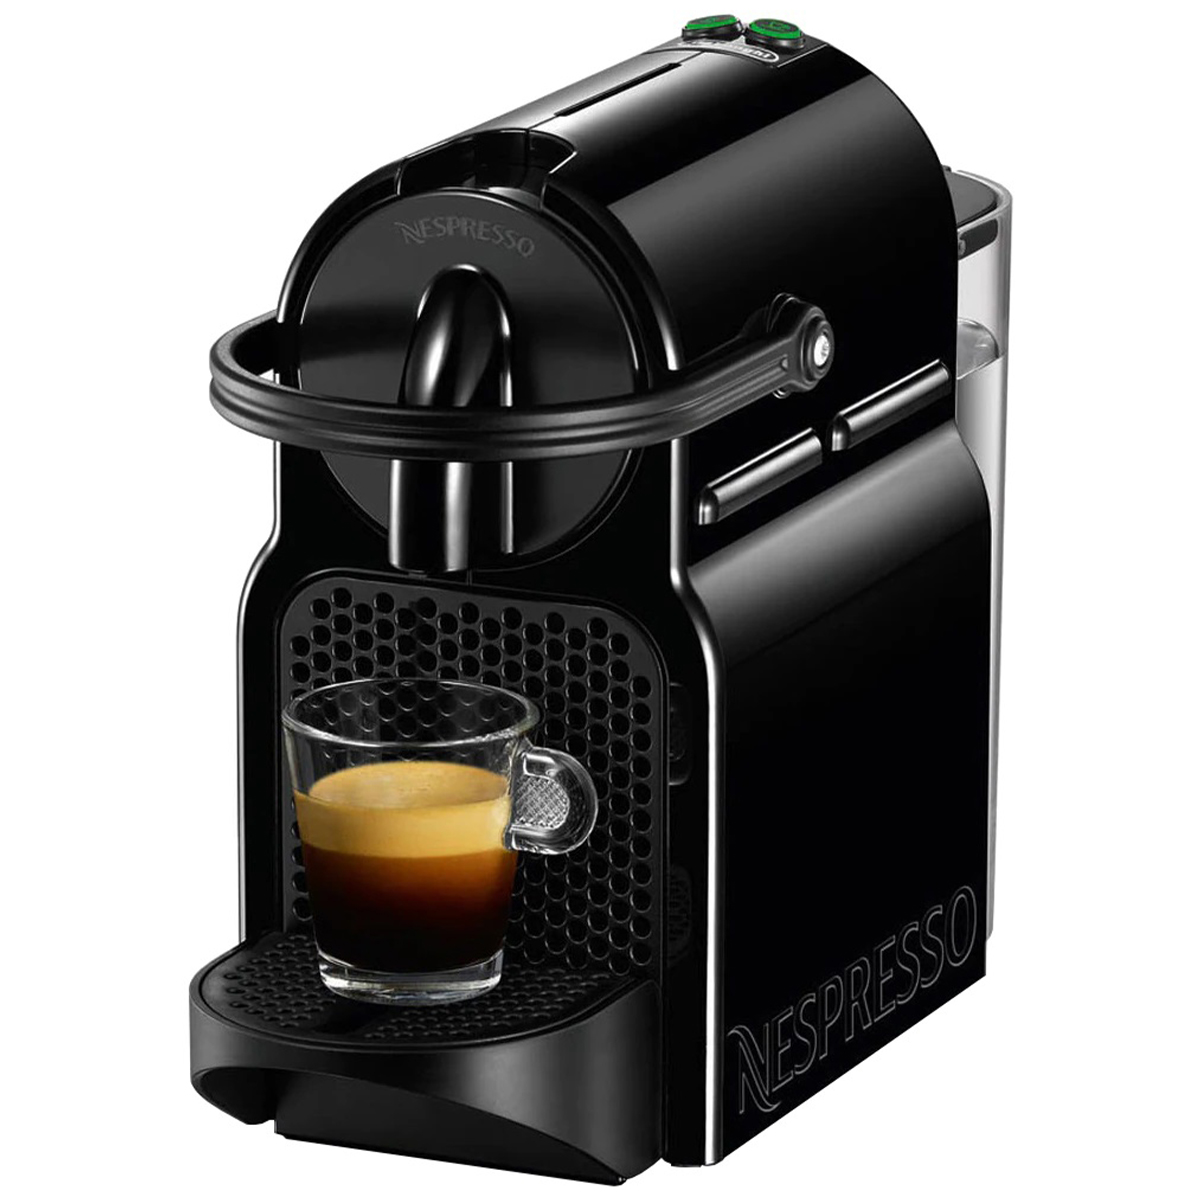 Espressor Nespresso Inissia En 80.b, 0.8 L, 1260 W, 19 Bar, Capsule, Negru